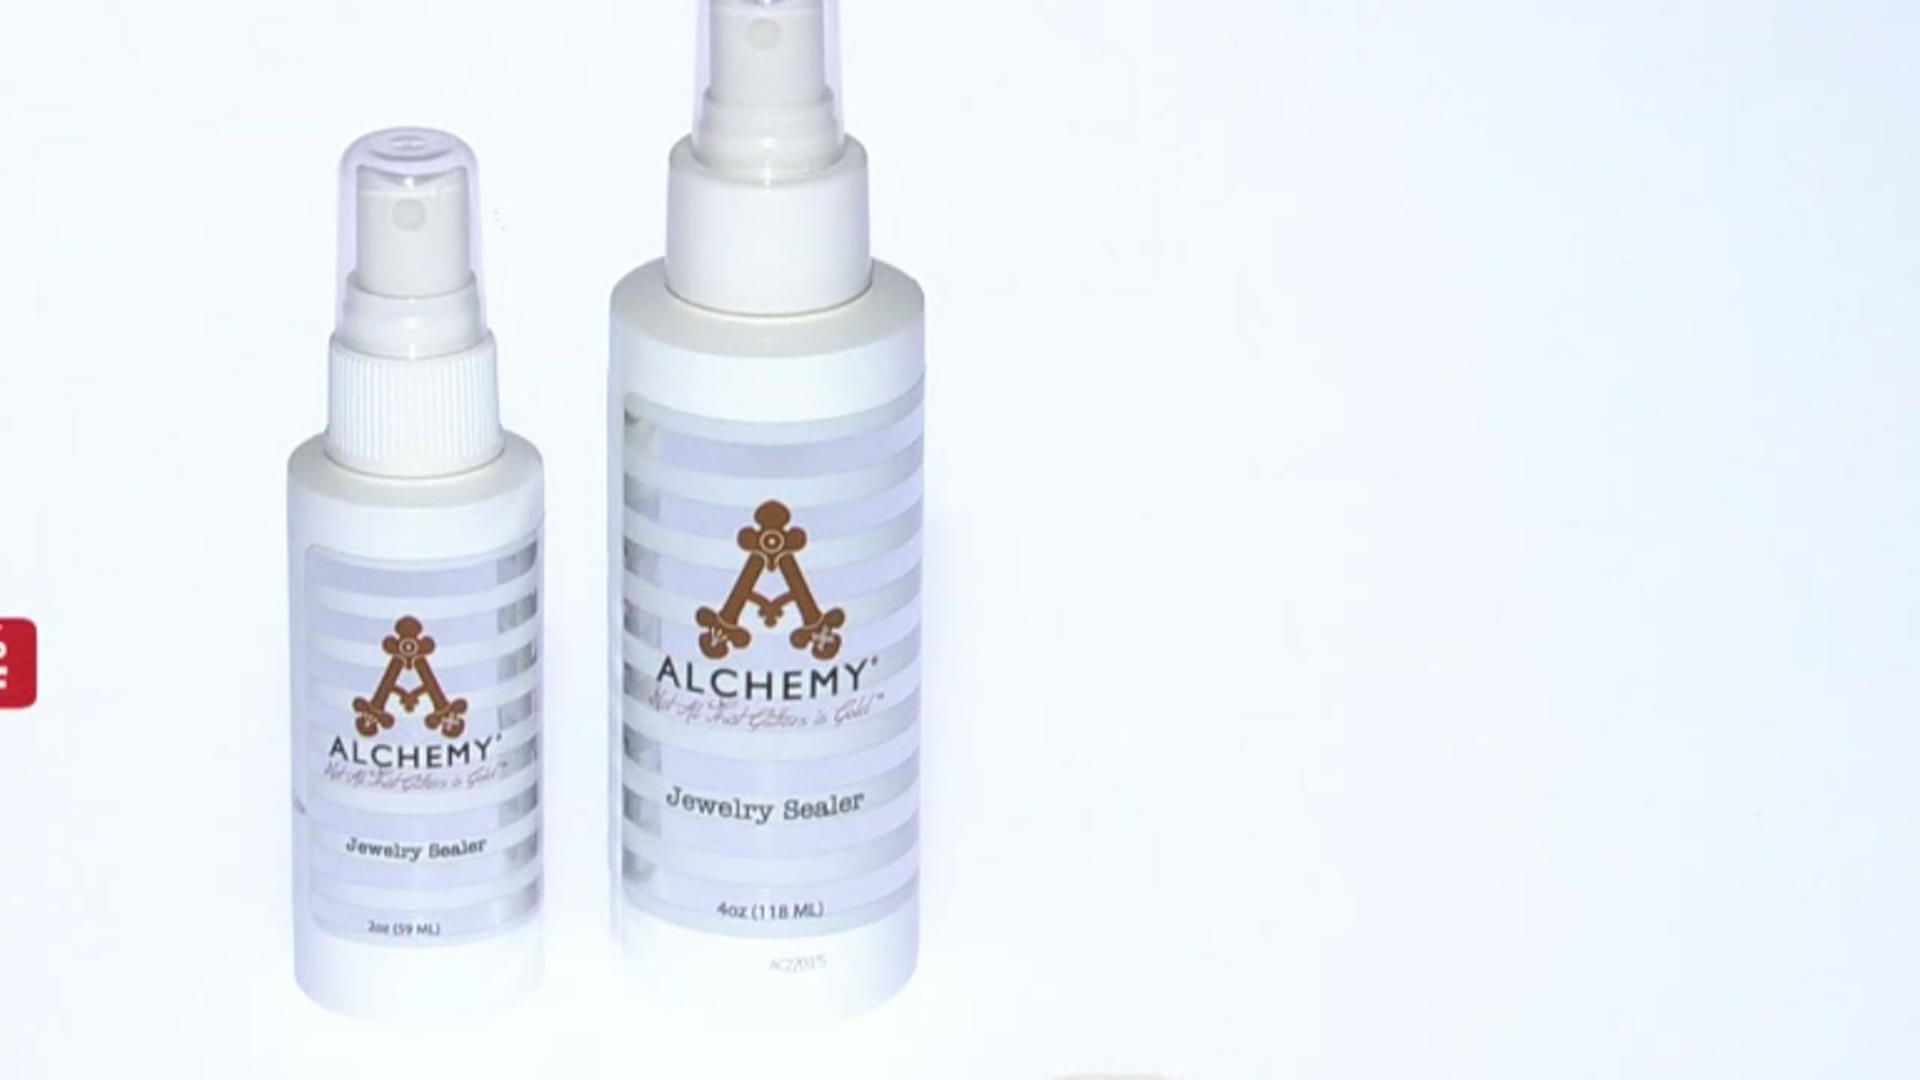 Alchemy Jewelry Sealer Bundle Includes 4 oz and 2 oz Spray Bottles Video Thumbnail